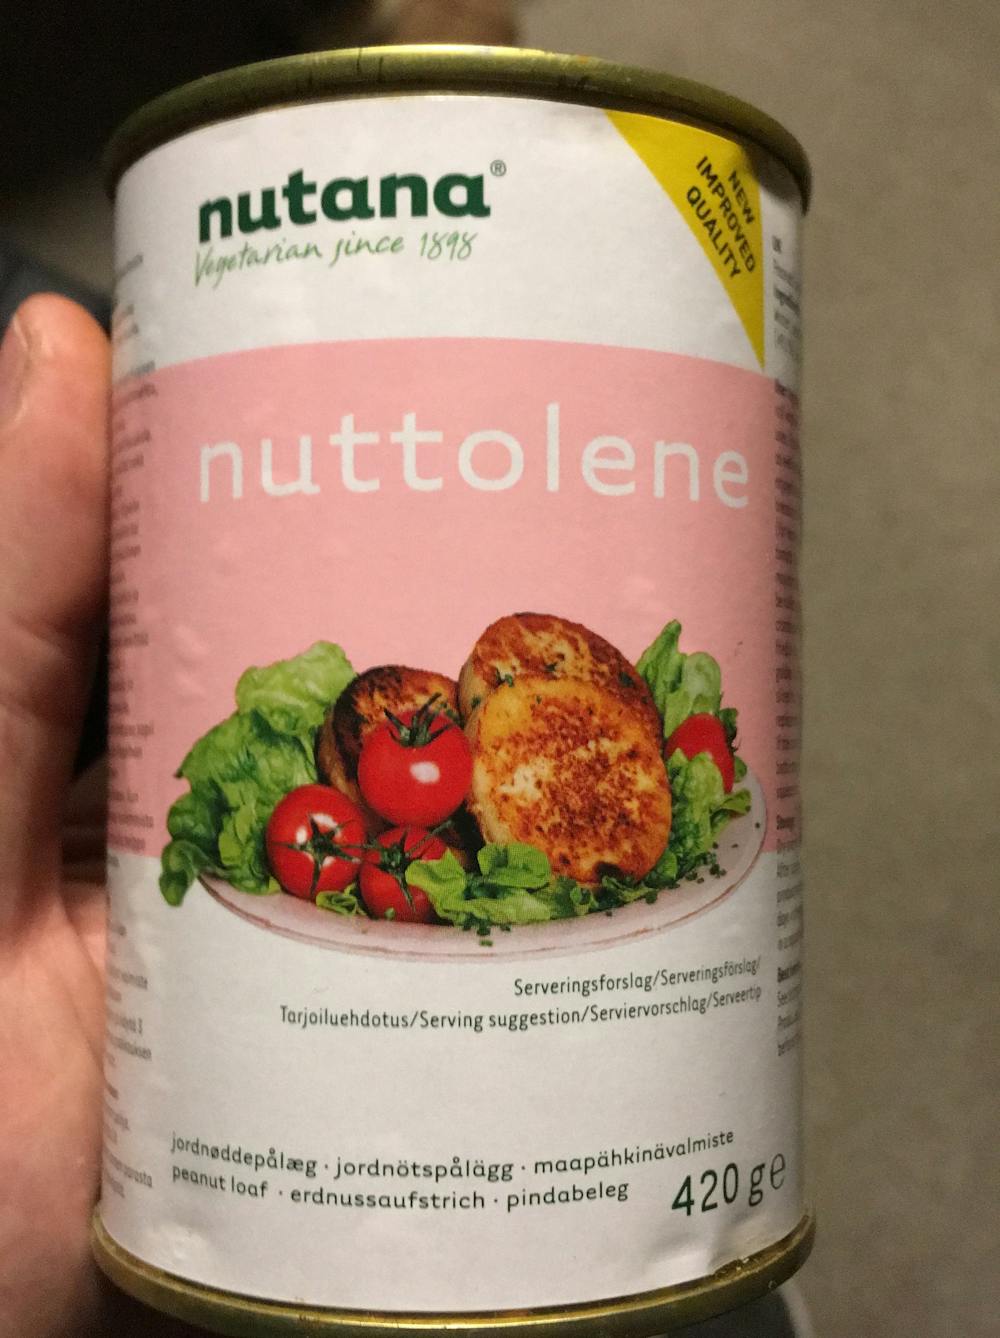 Nuttolene, Nutana